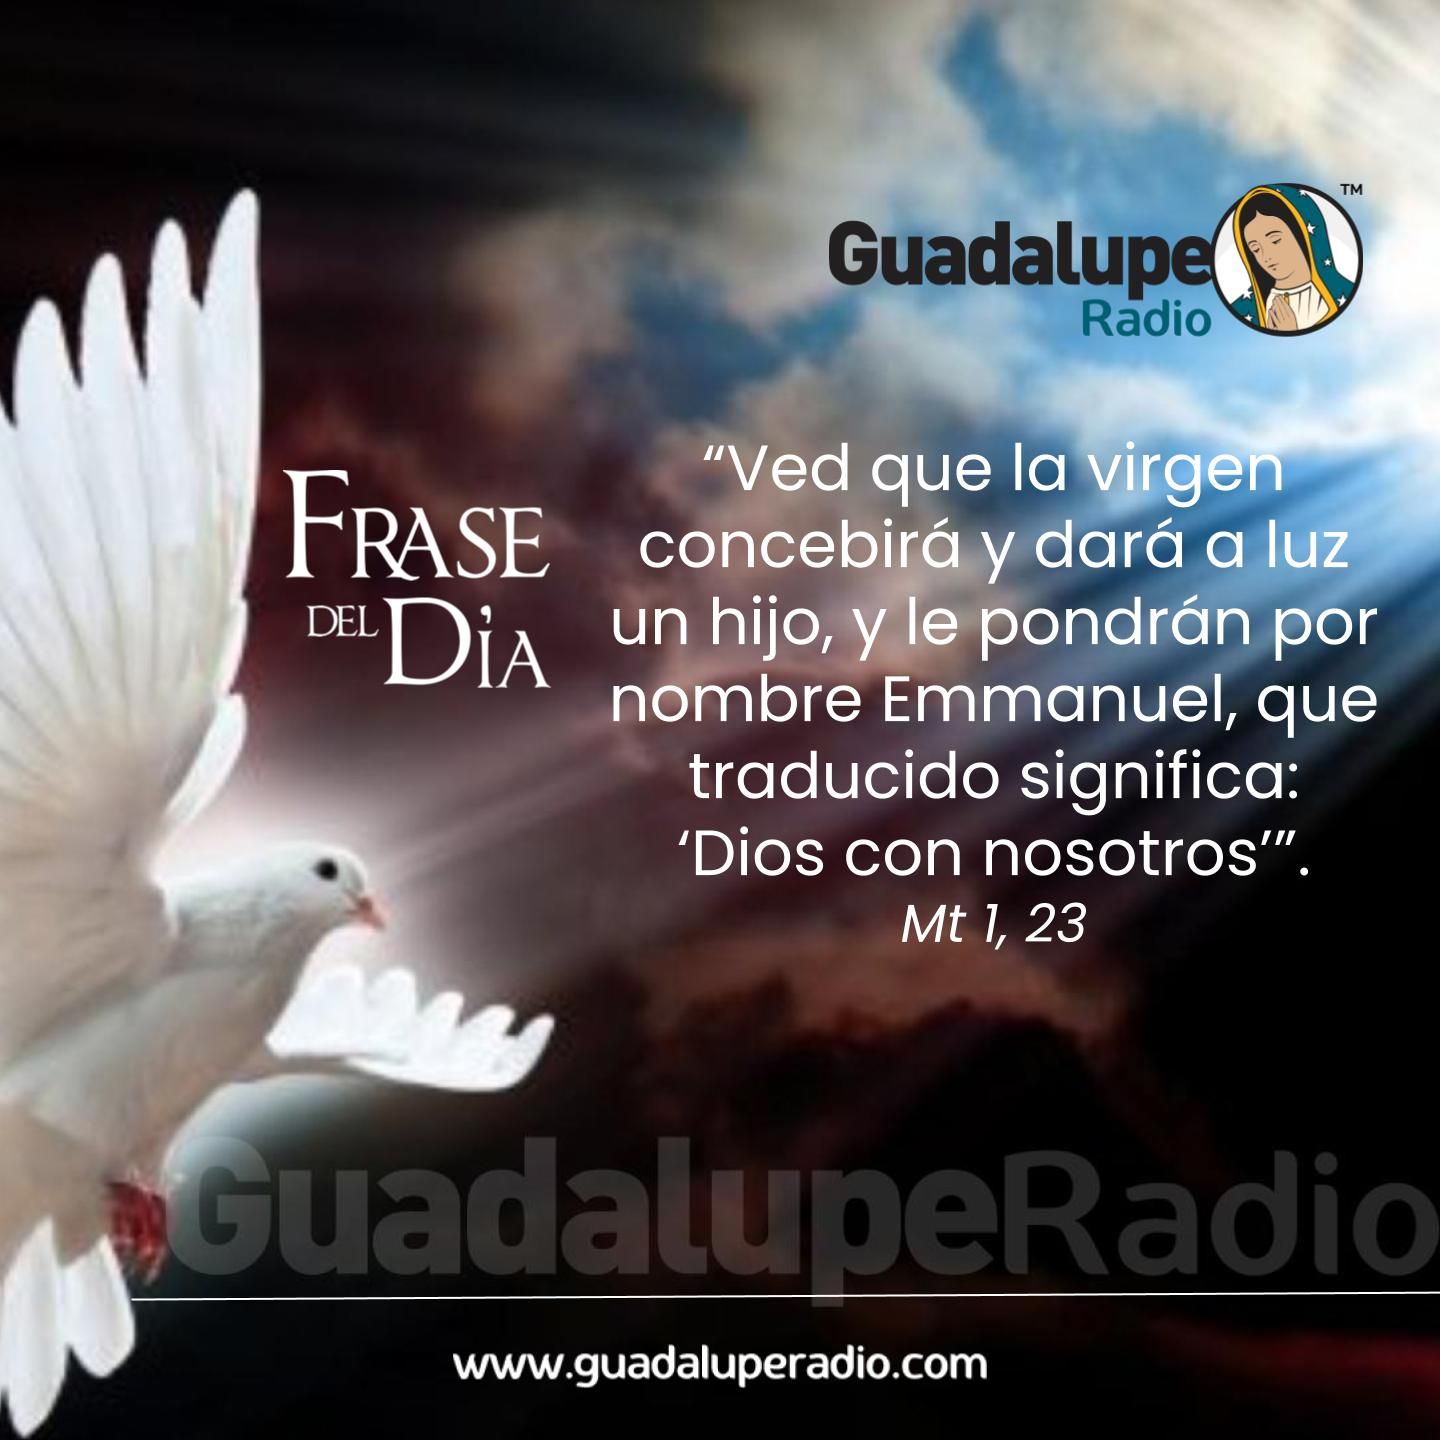 Guadalupe Radio on Twitter: 